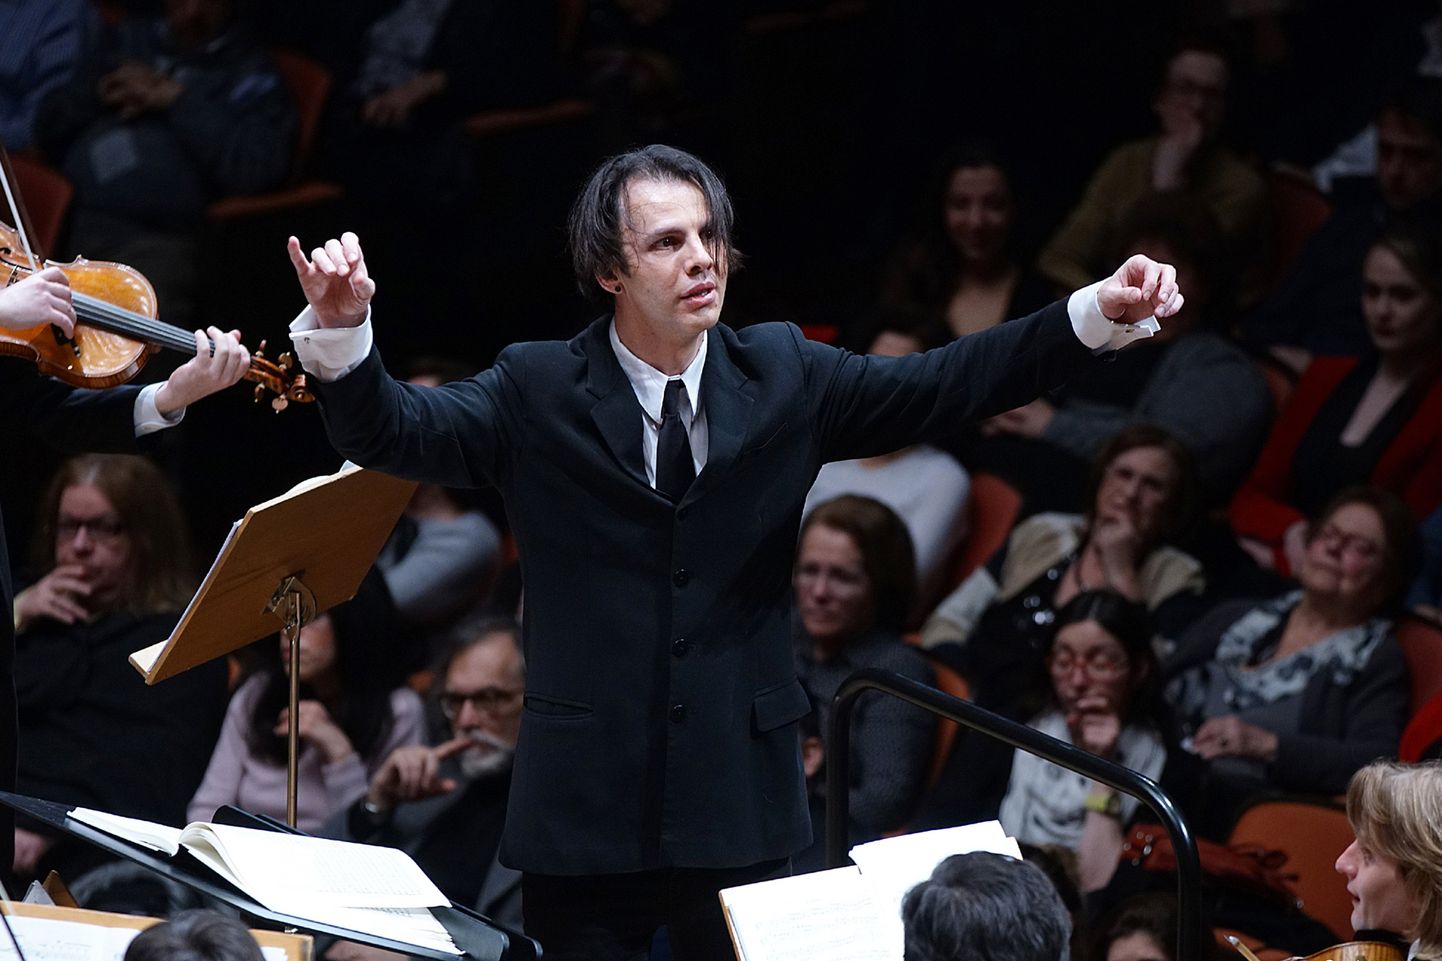 Vastuoluline dirigent Theodor Currentzis 2017. Ateenas juhatamas